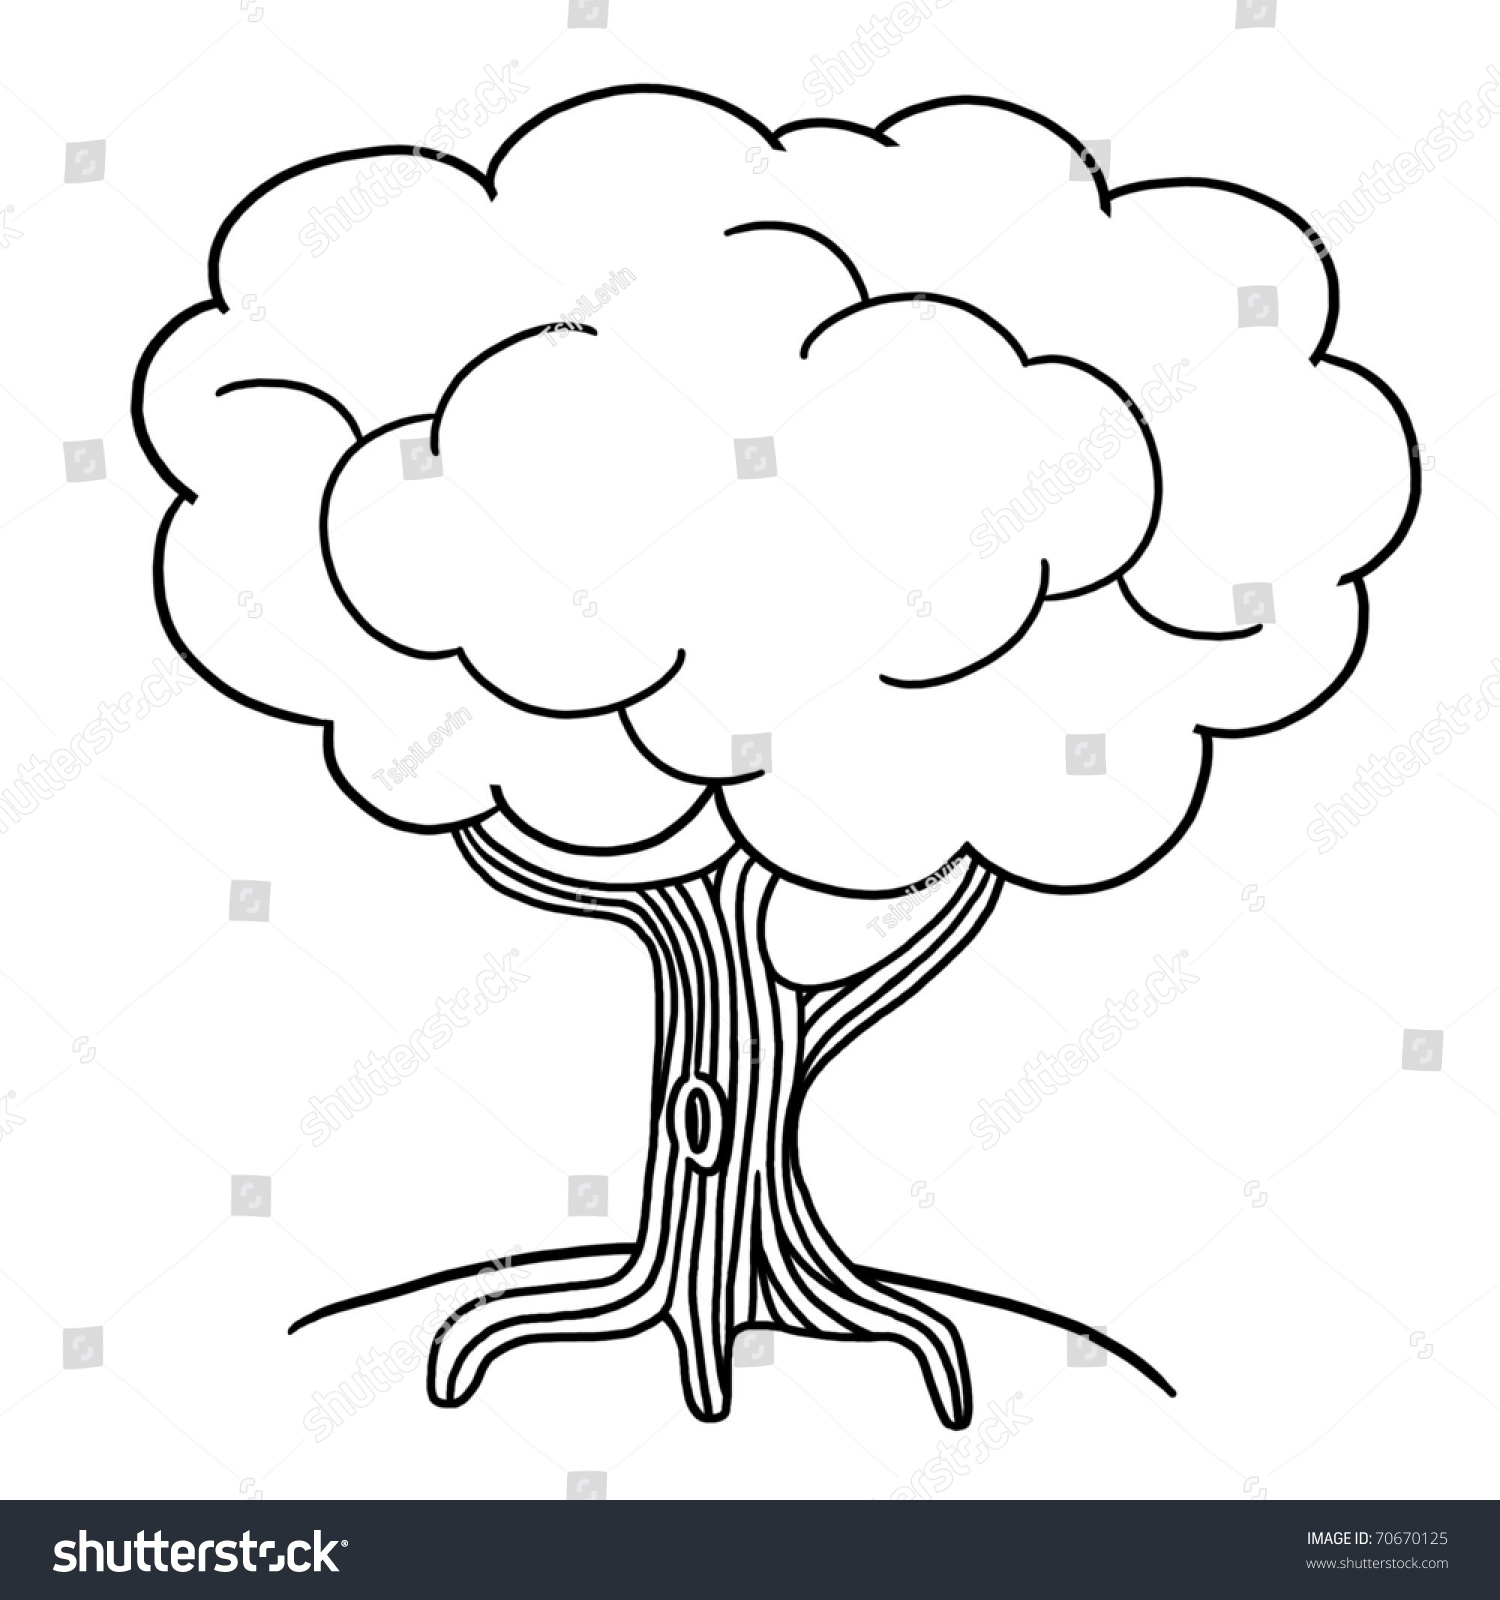 Tree Illustration Outline Drawing Tree Stock Illustration 70670125